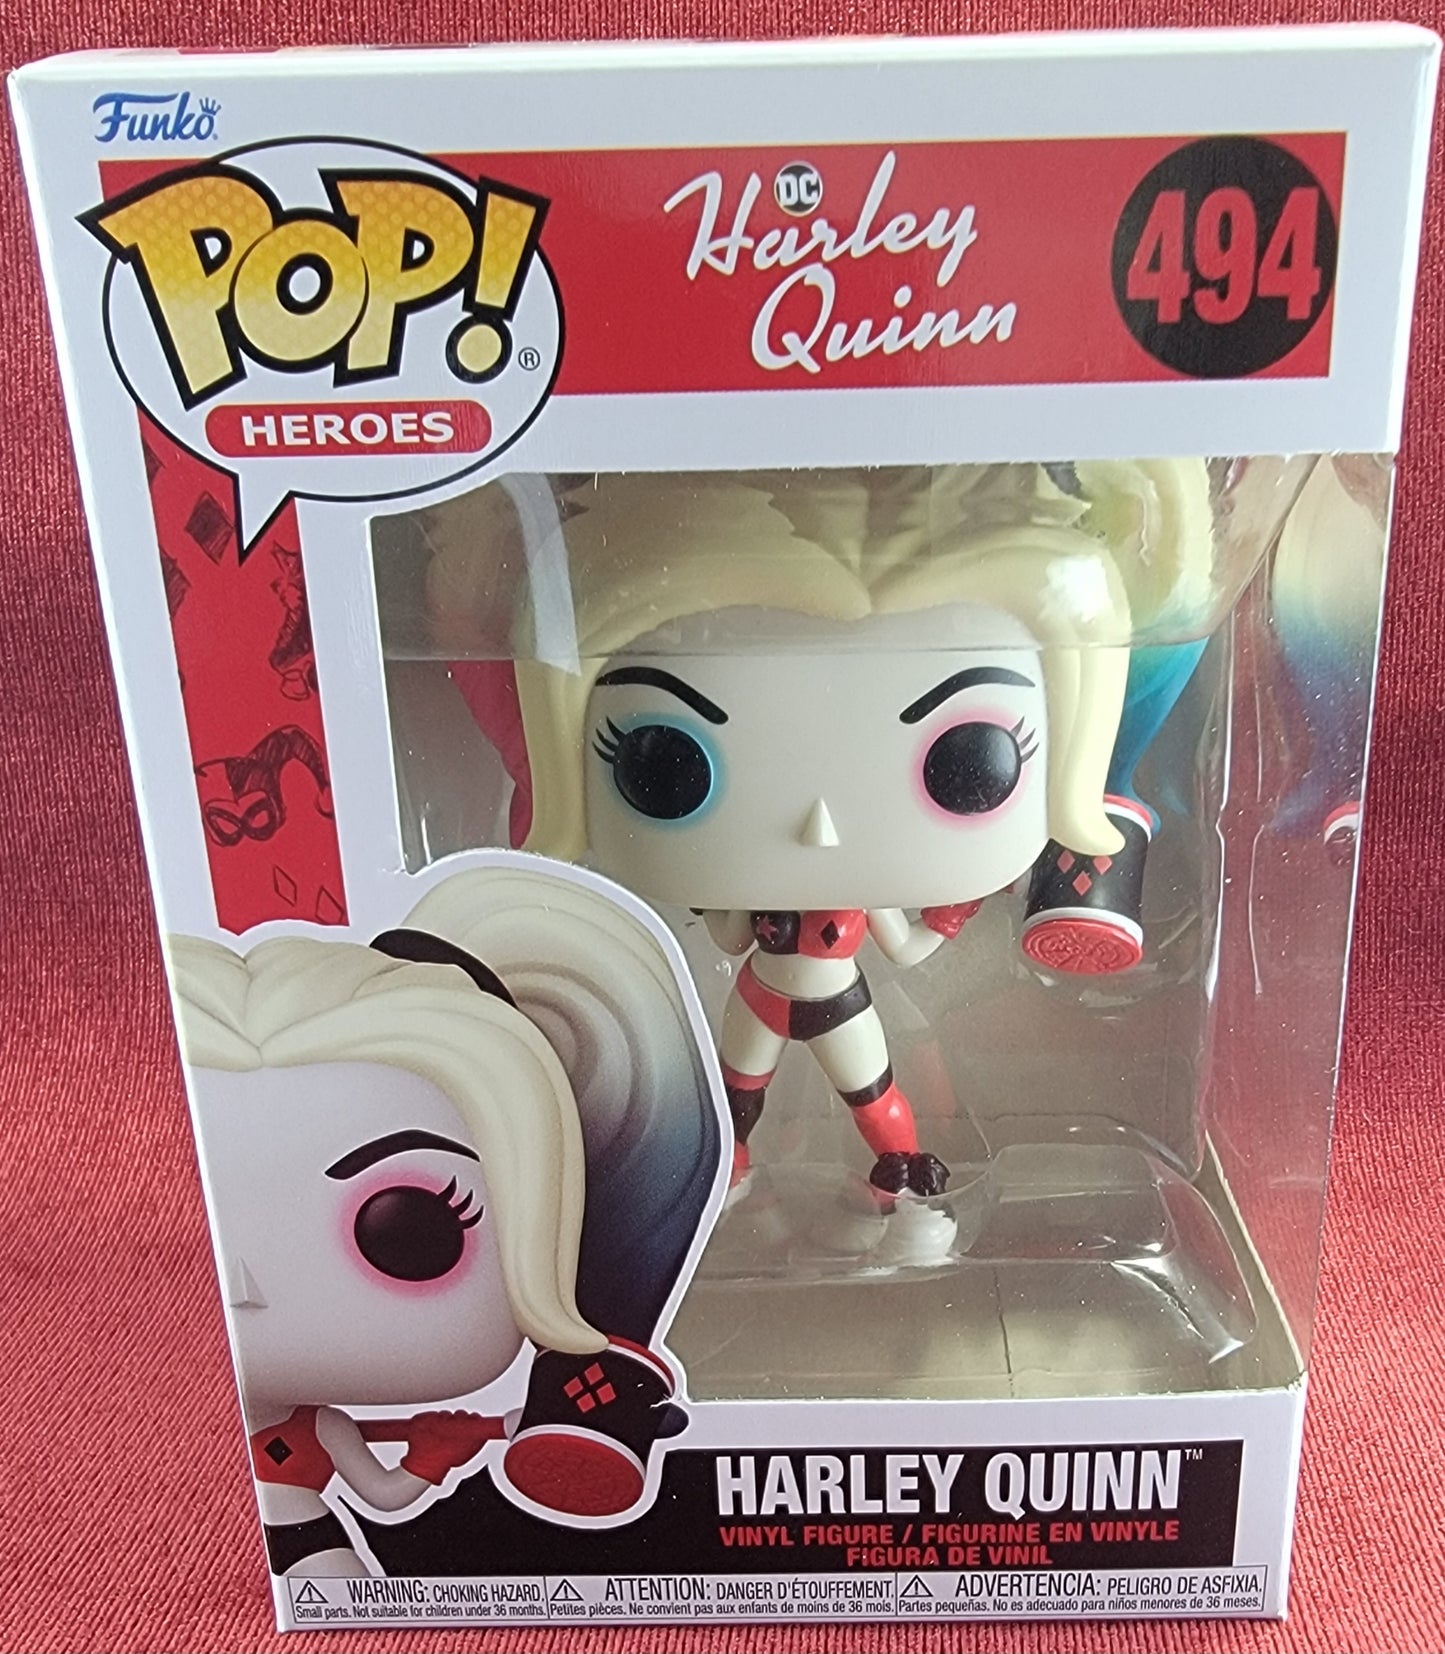 Harley quinn funko # 494 (nib)
With pop protector